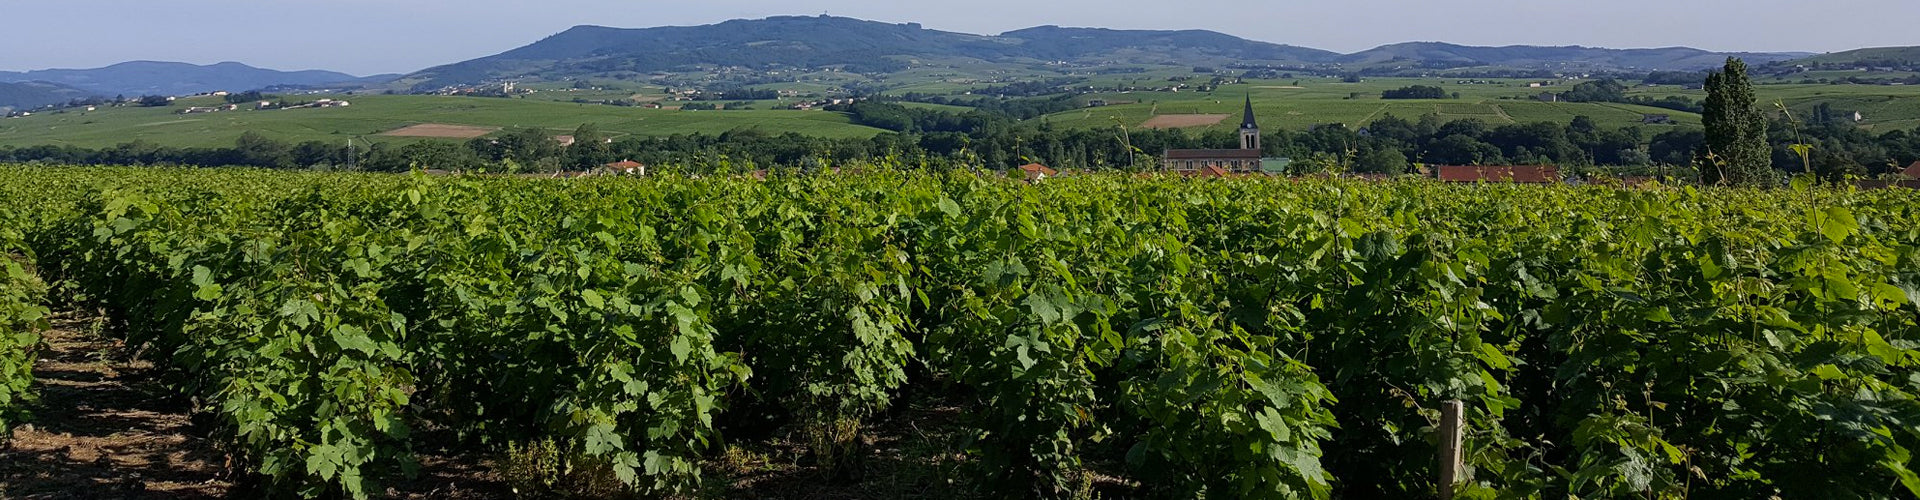 Duboeuf Vineyards in Beaujolais